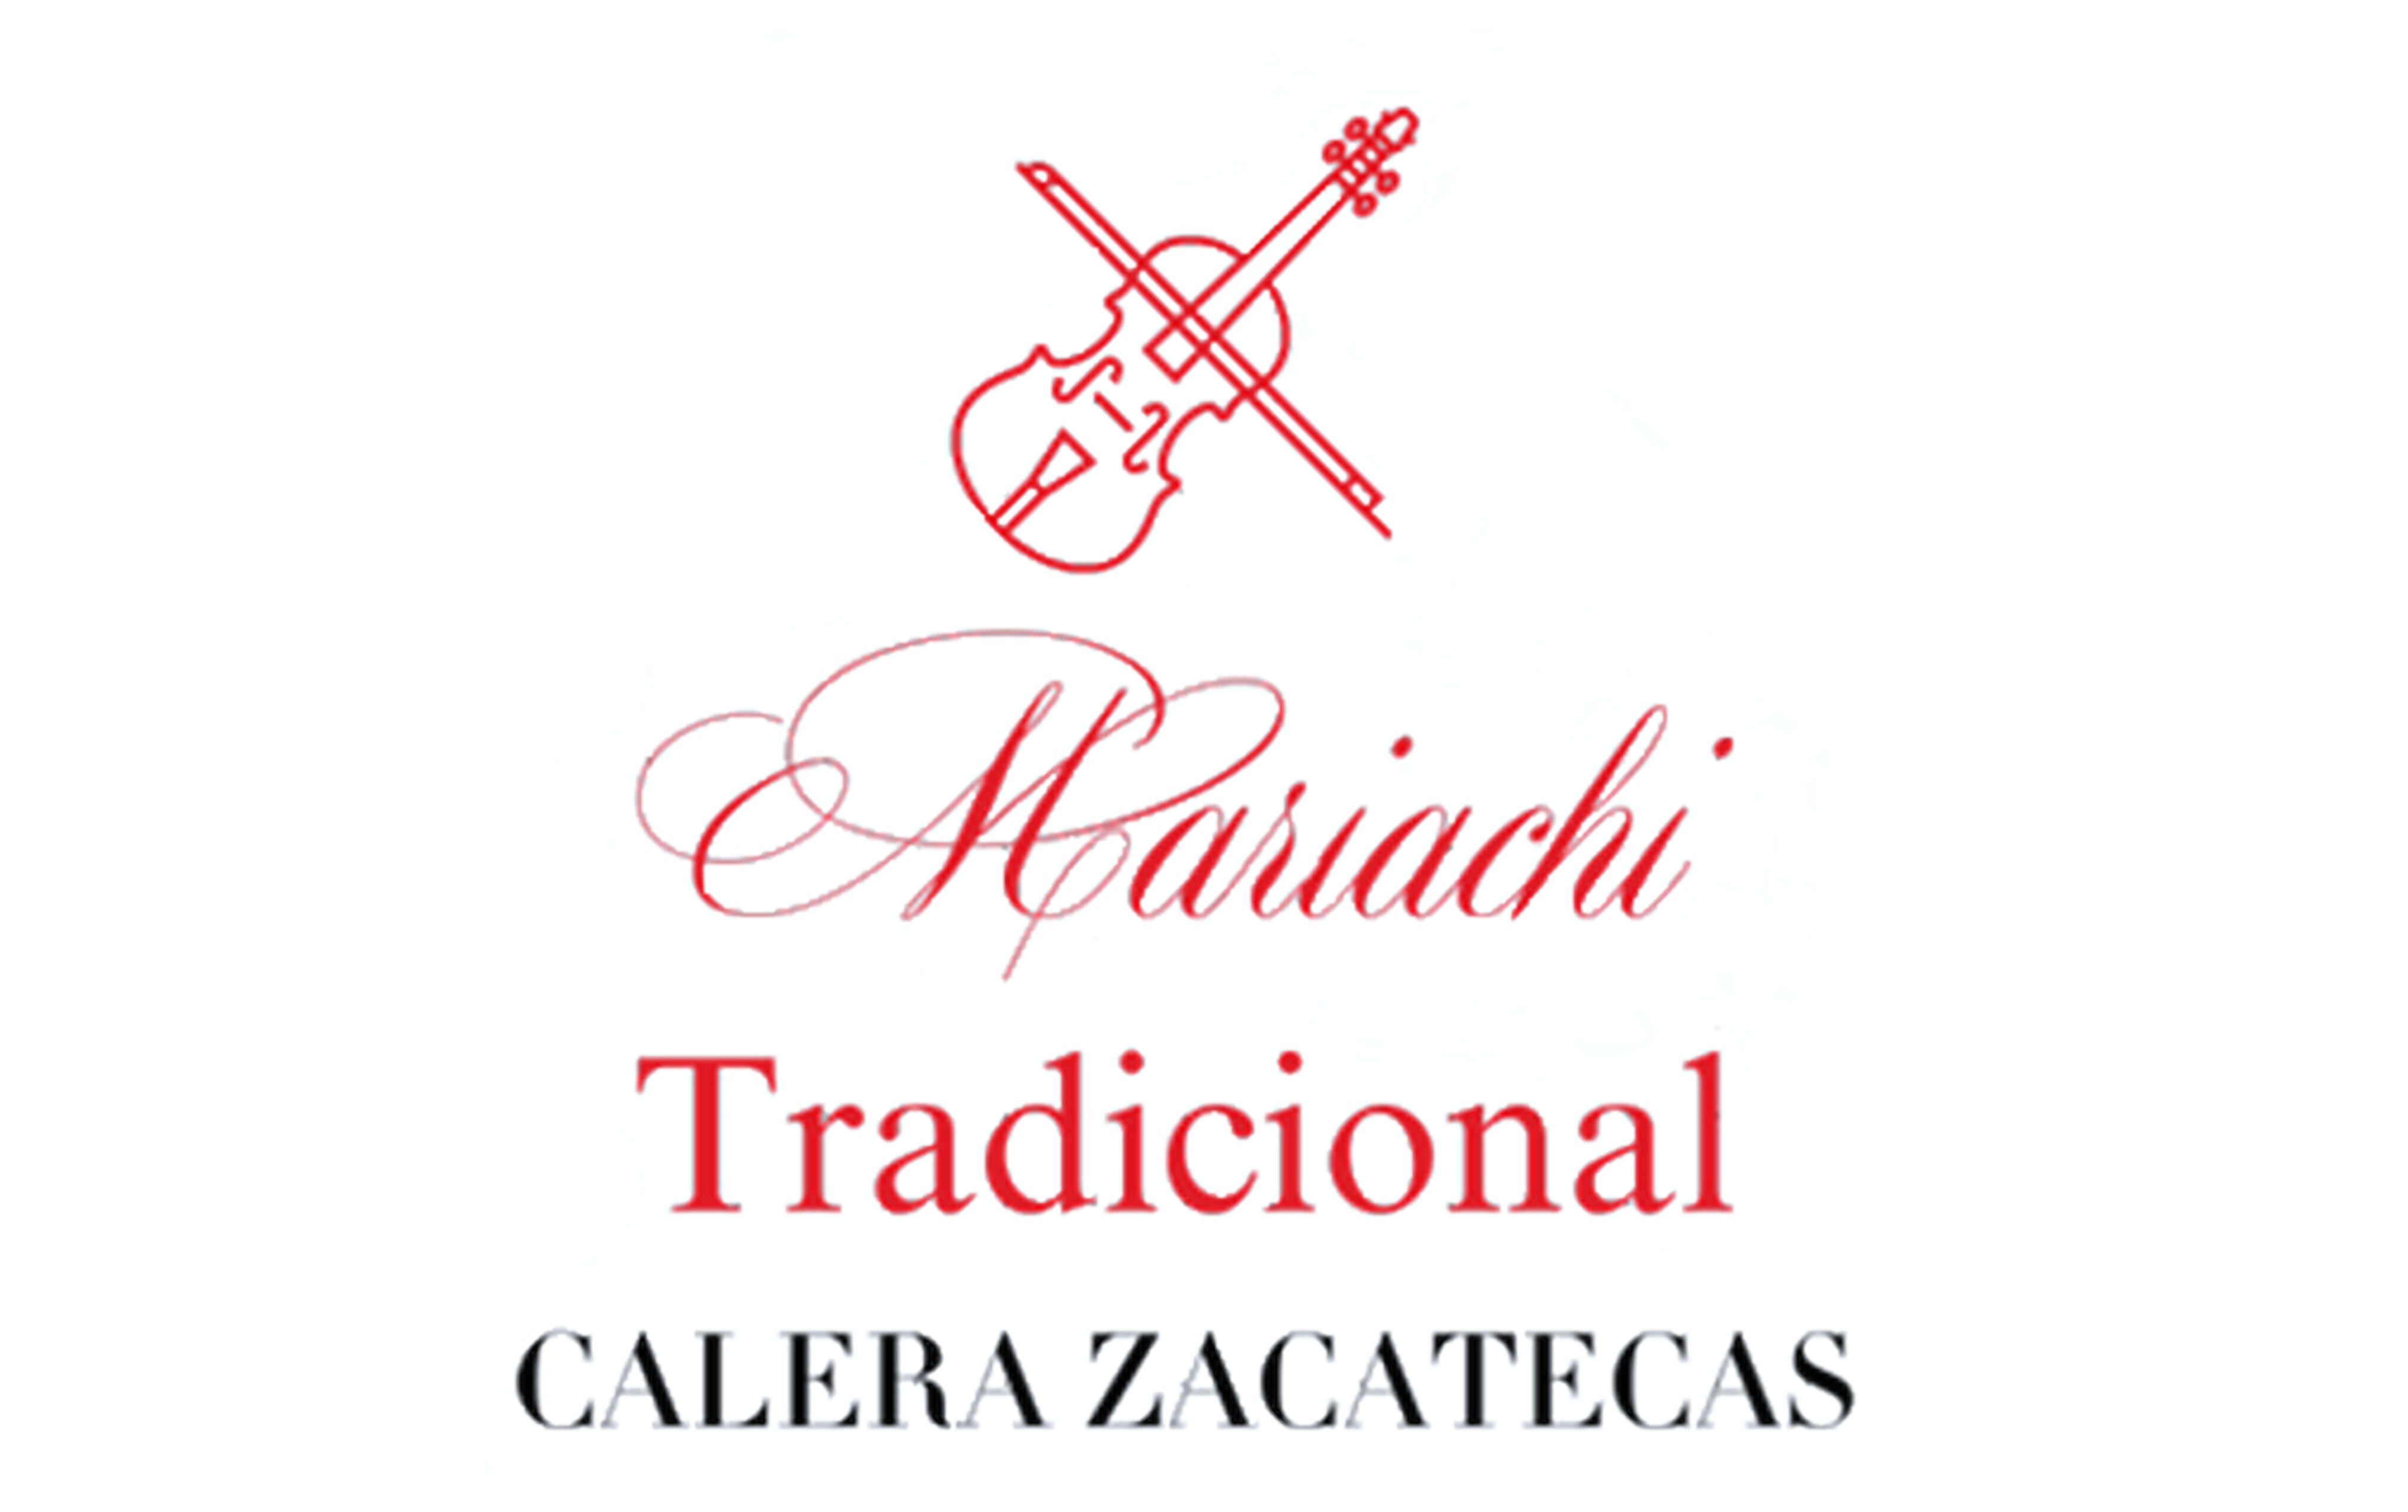 Mariachi tradicional calera Zacatecas